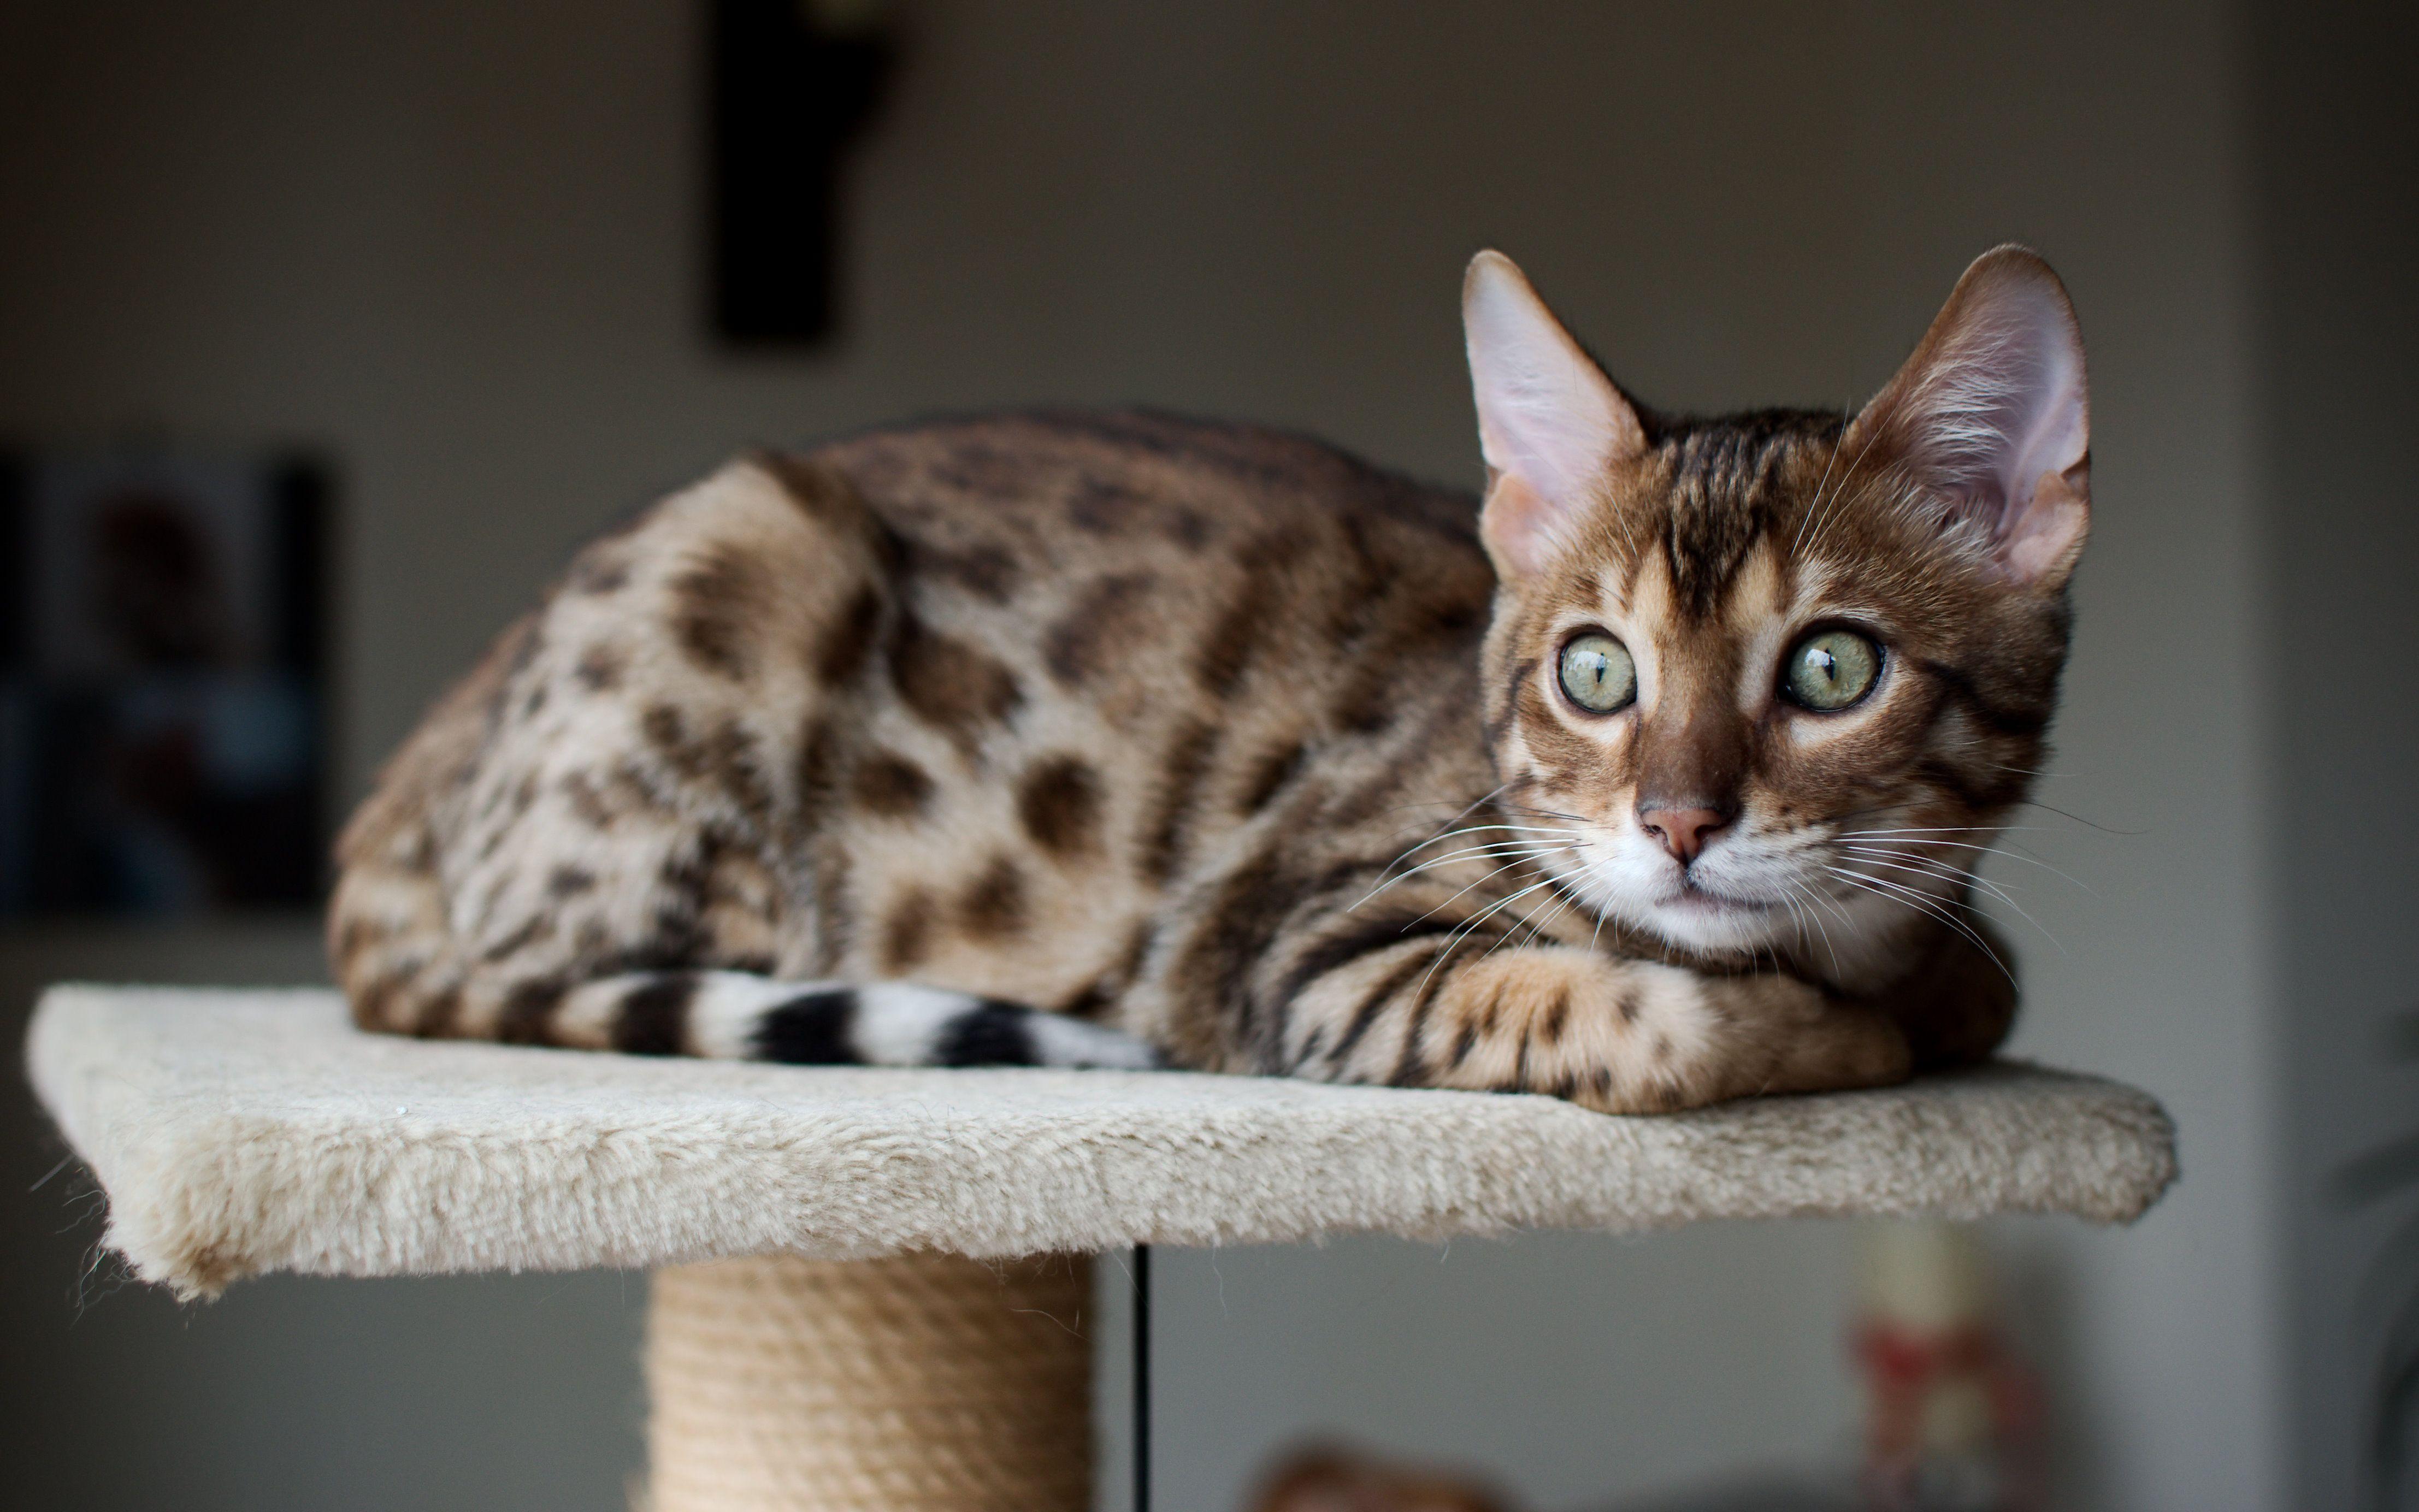 Beautiful Bengal cat saw someone wallpaper and image